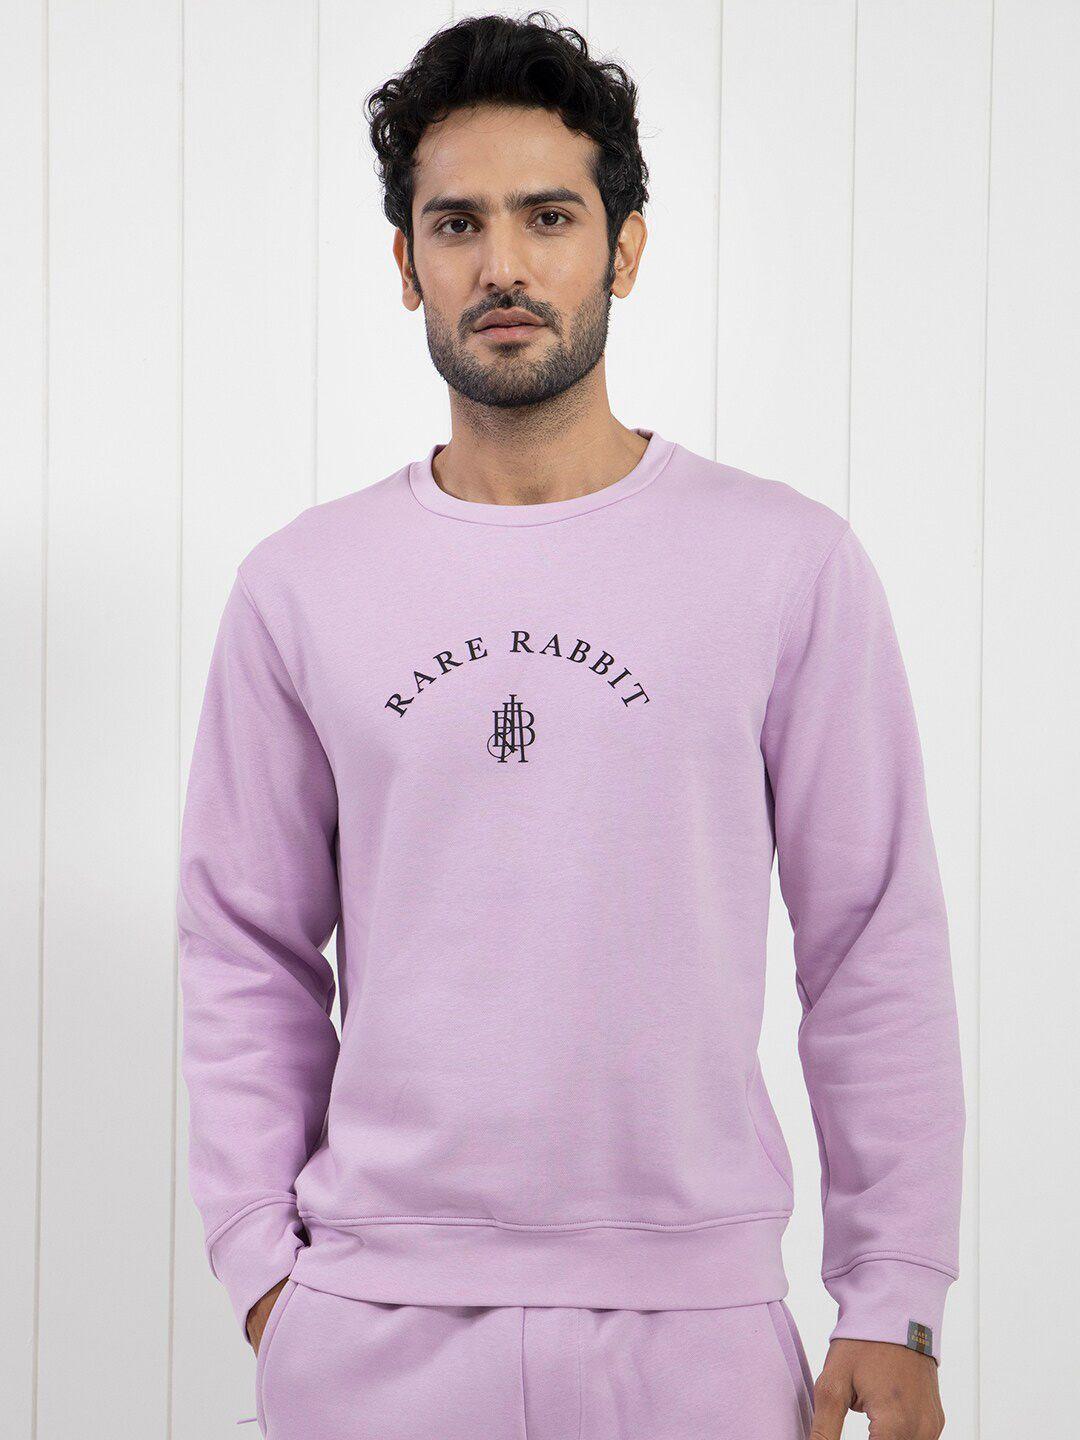 rare-rabbit-typography-printed-round-neck-cotton-sweatshirt